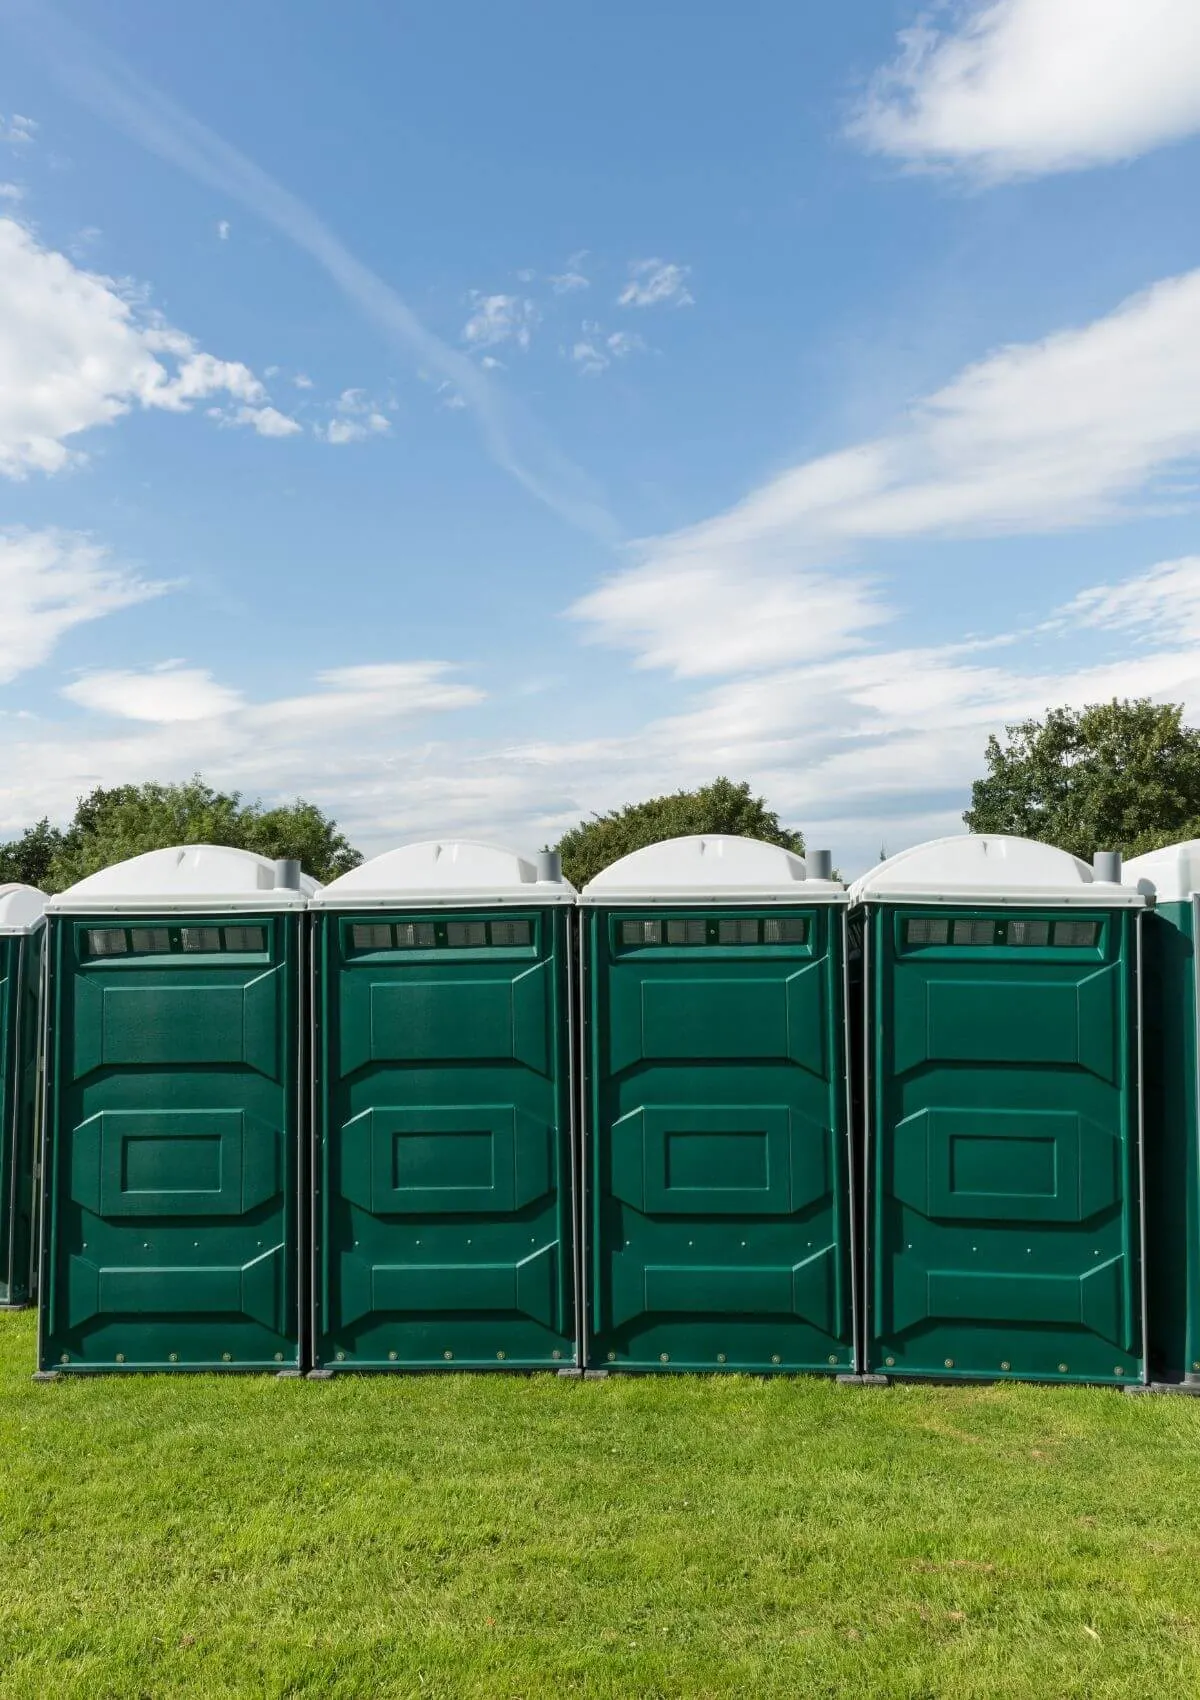 How to avoid festival toilets